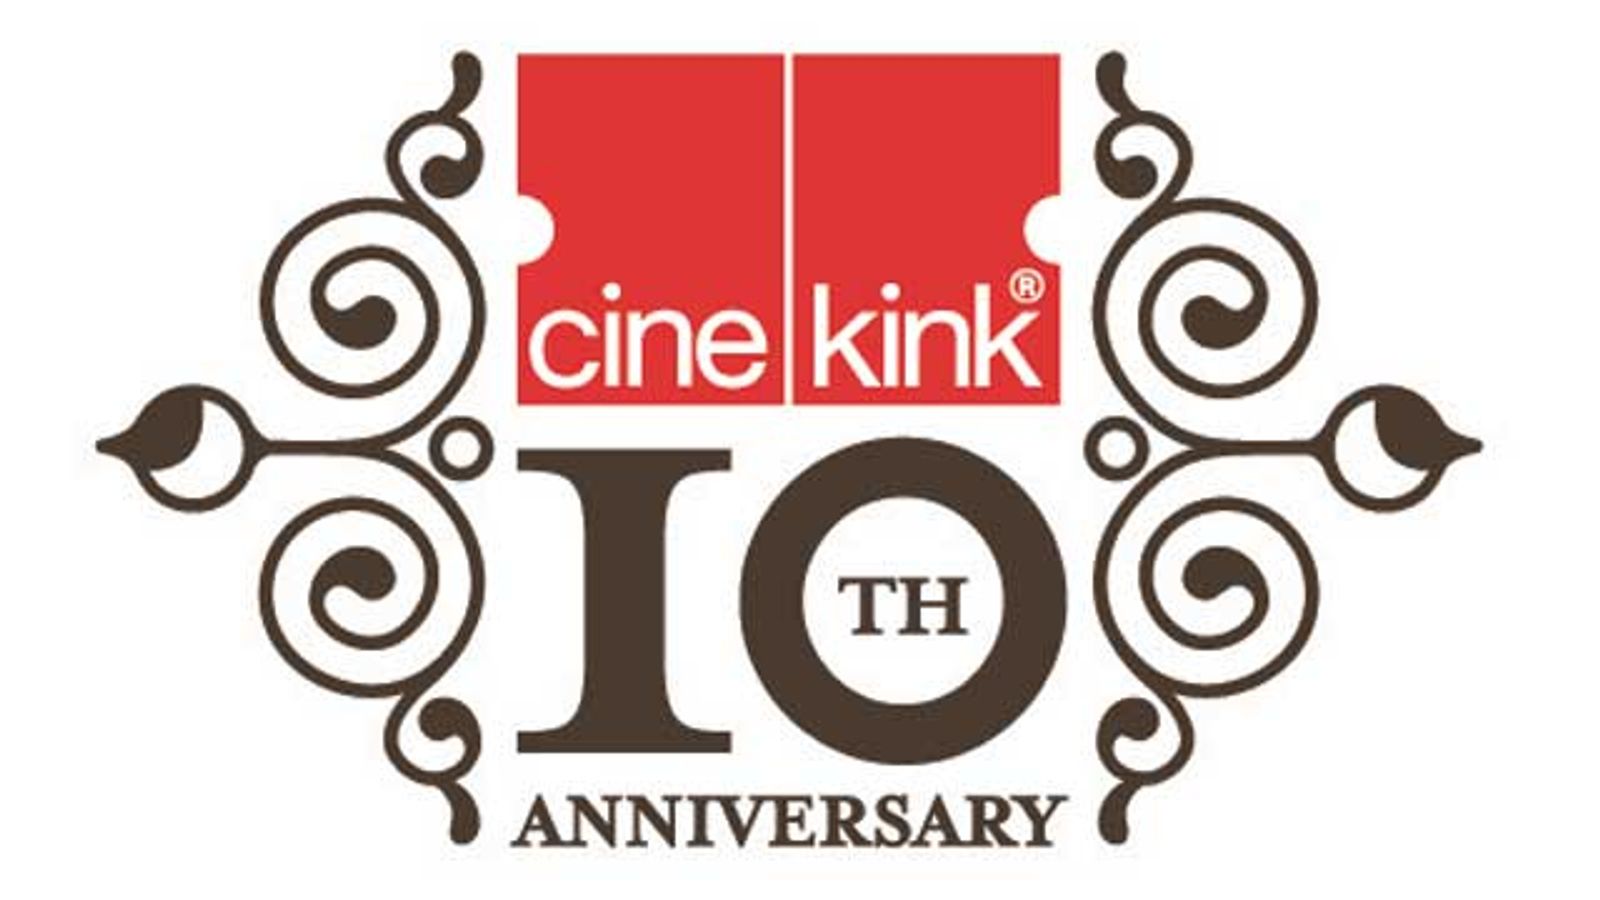 CineKink Screens Films at Austin BedFEST This Friday